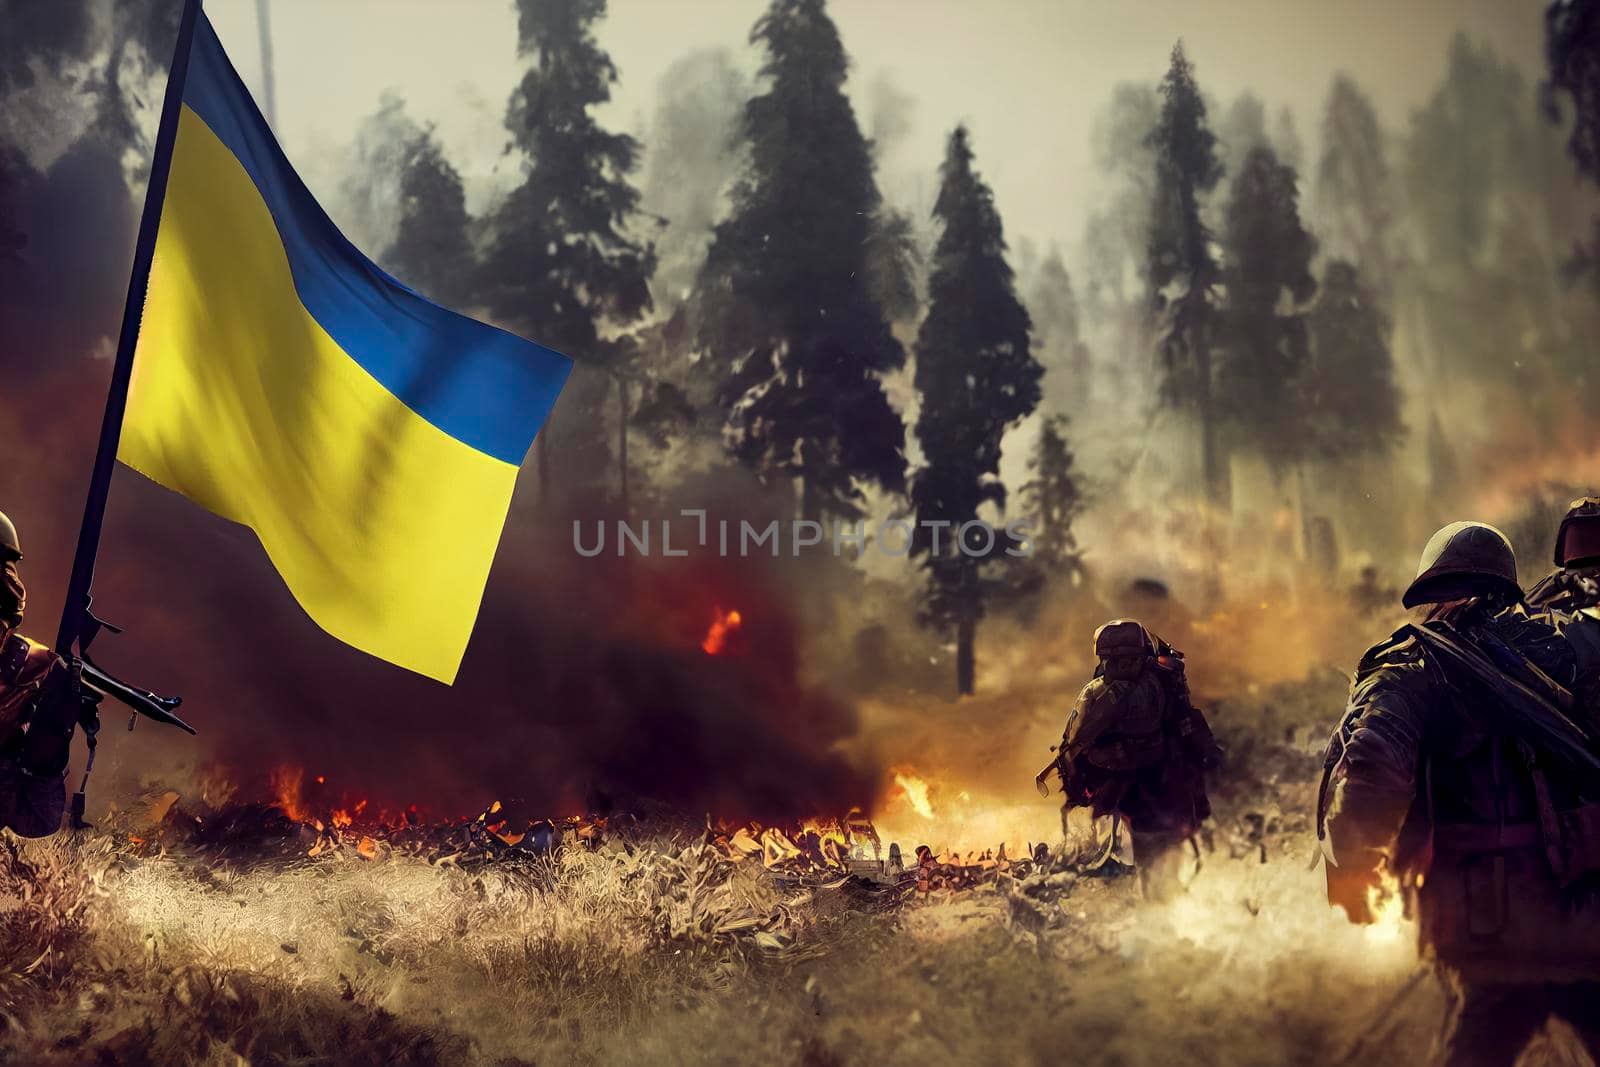 Battlefield illustration of the Ukrainian-Russian war